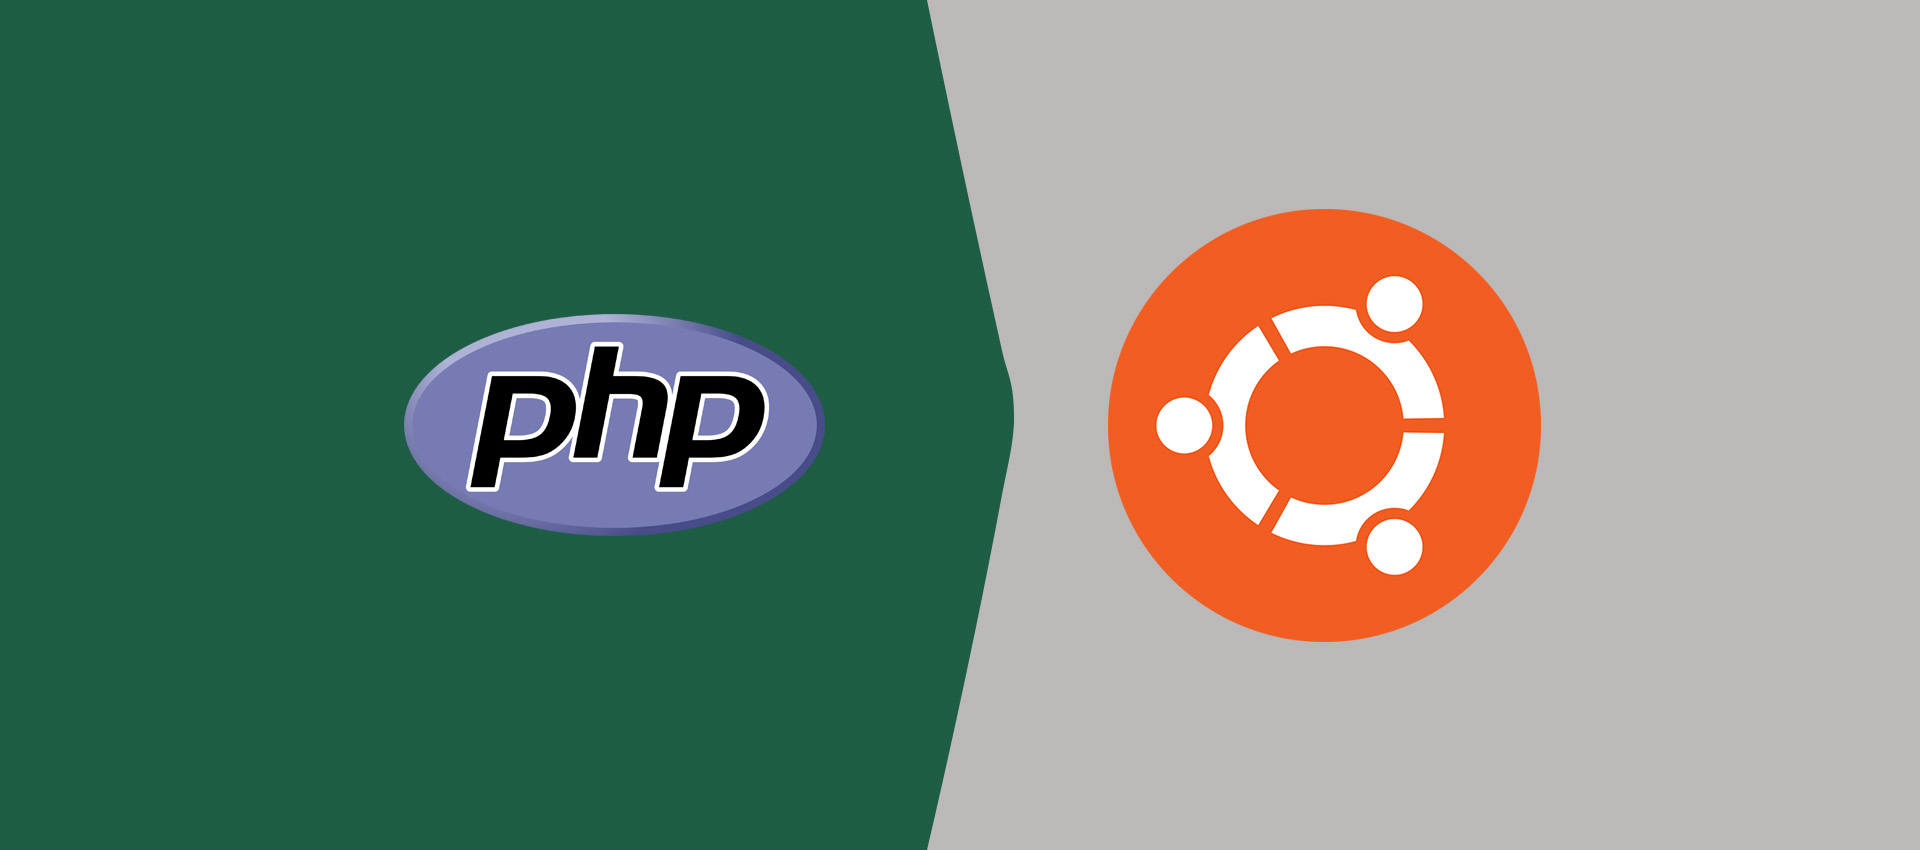 How To Install PHP On Ubuntu 20.04